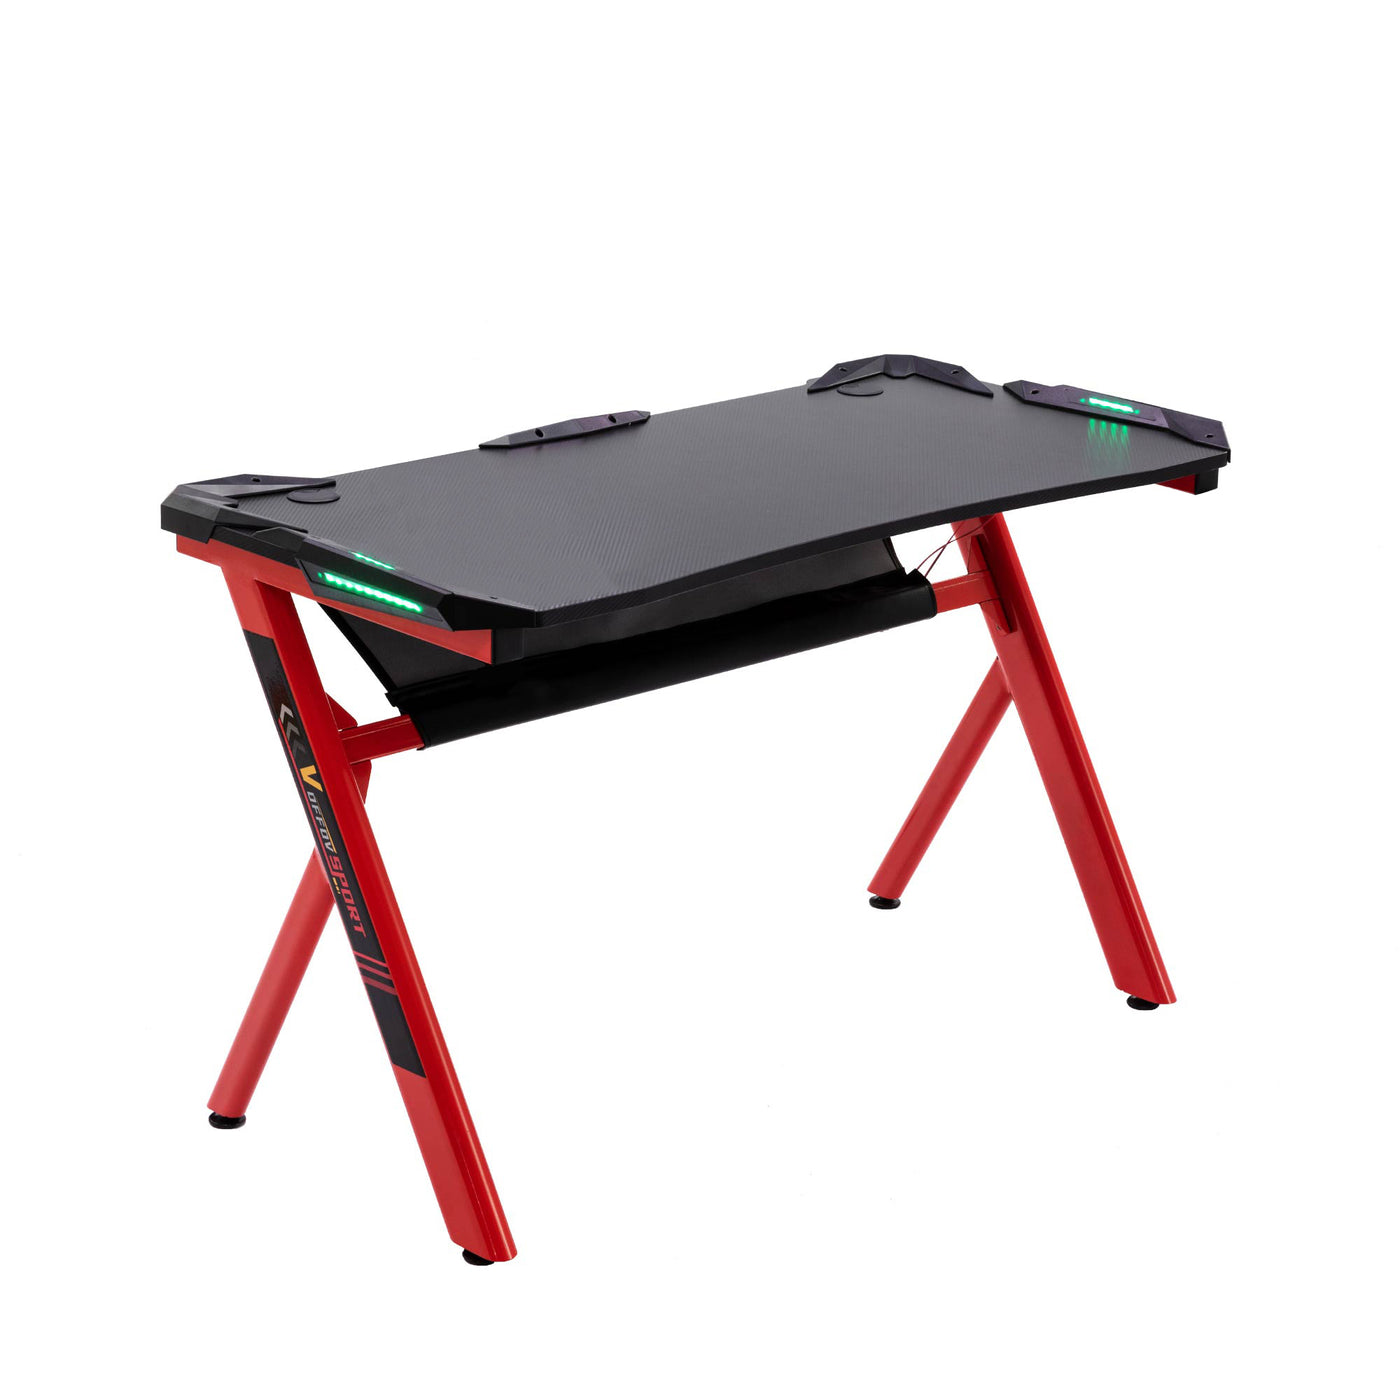 Tortox GD400 Gaming Desk, Brillant Framework, Four RGB Light Strips, Cable Mgt, Power Strip Holder, Cup Holder / Headset Holder, Carbon Fiber Surface, Steel Frame Construction, Red | GD400 - RED